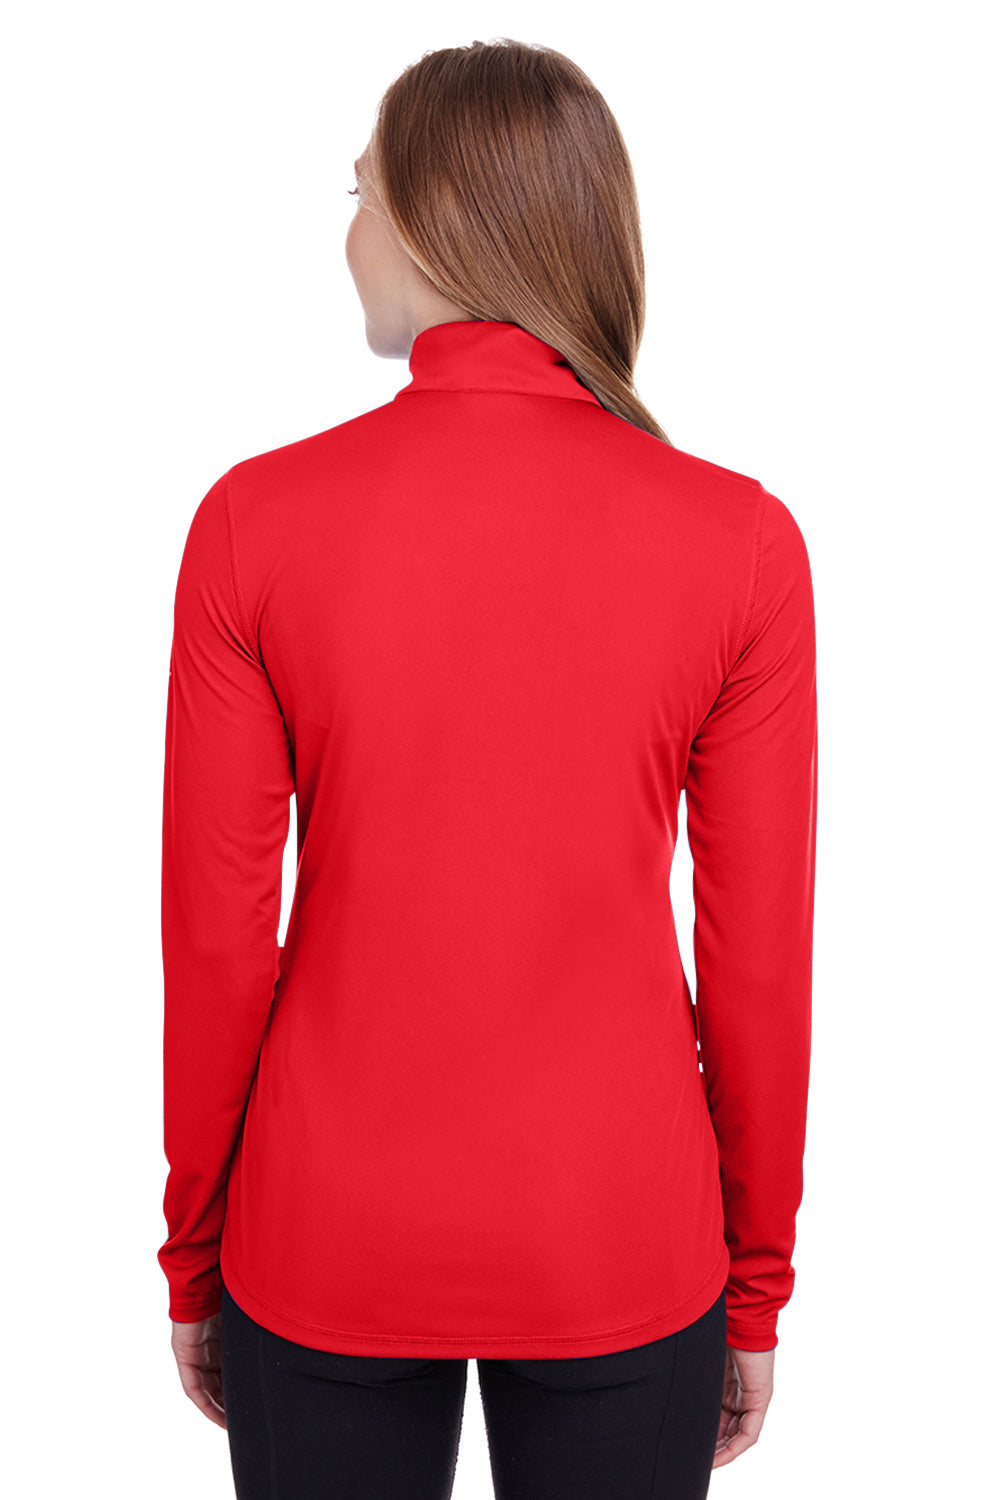 Puma 596803 Womens Icon Performance Moisture Wicking Full Zip Sweatshirt Red Back